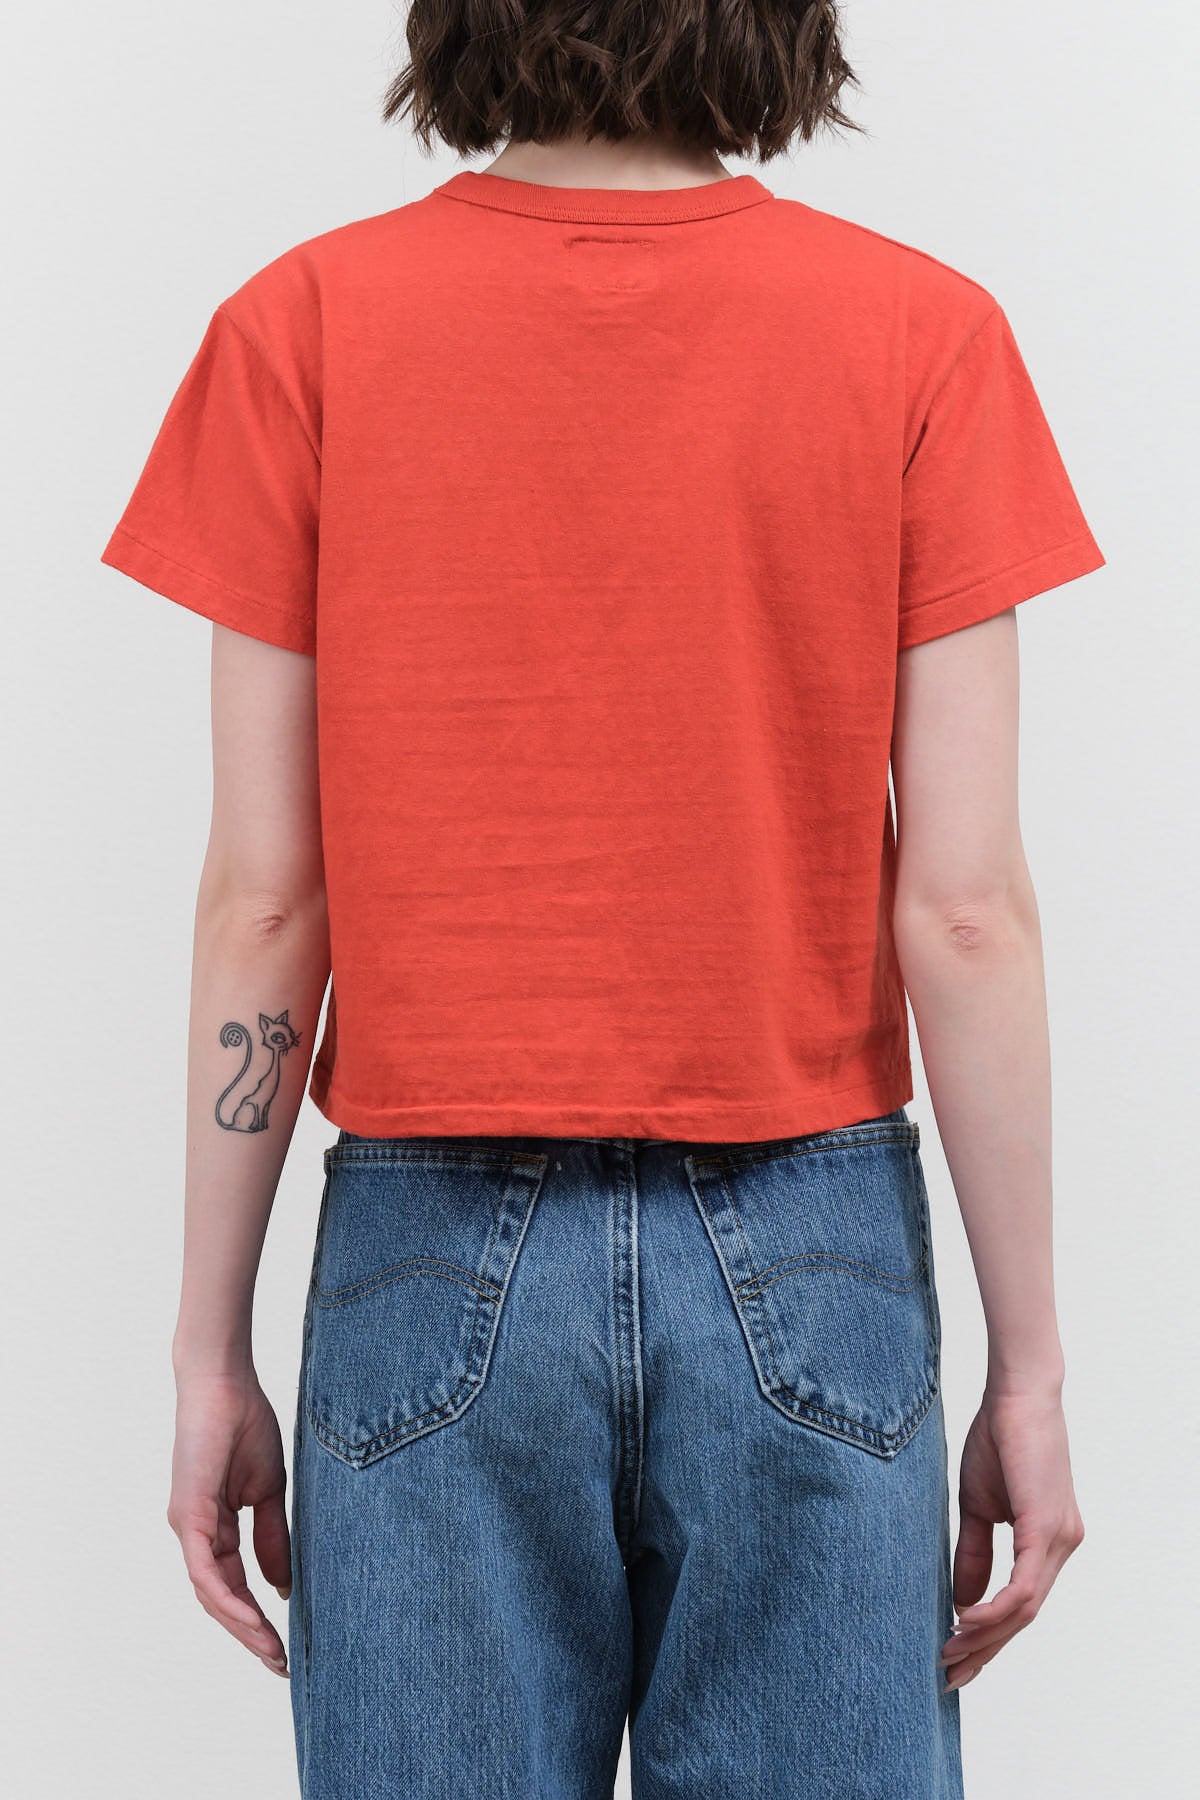 Dark Orange Short Sleeve Hi'aka T-shirt by Sunray Sportswear